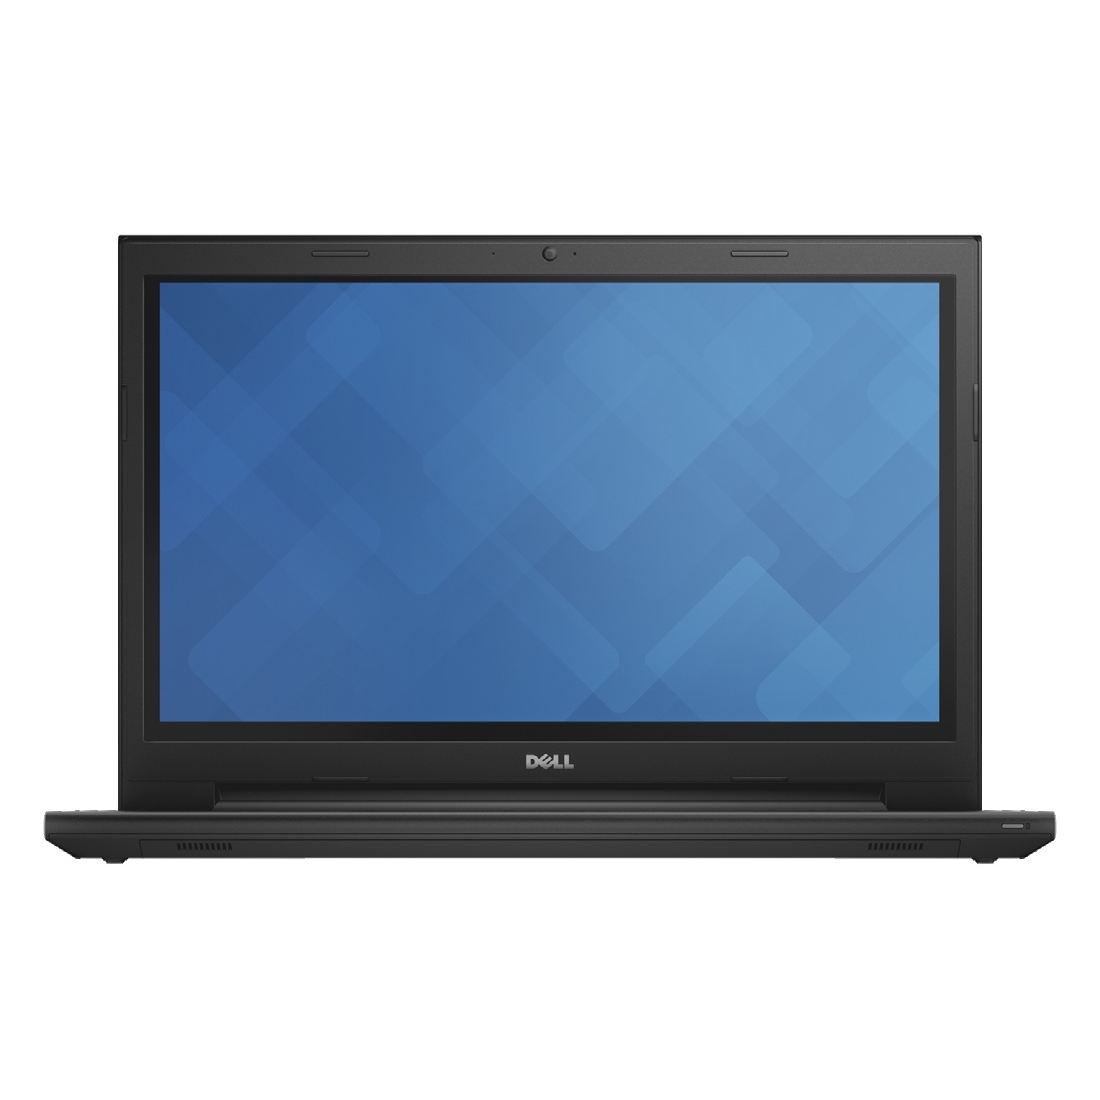 Ноутбук Dell Inspiron 3542 (I35p45ddl-34) Black Отзывы